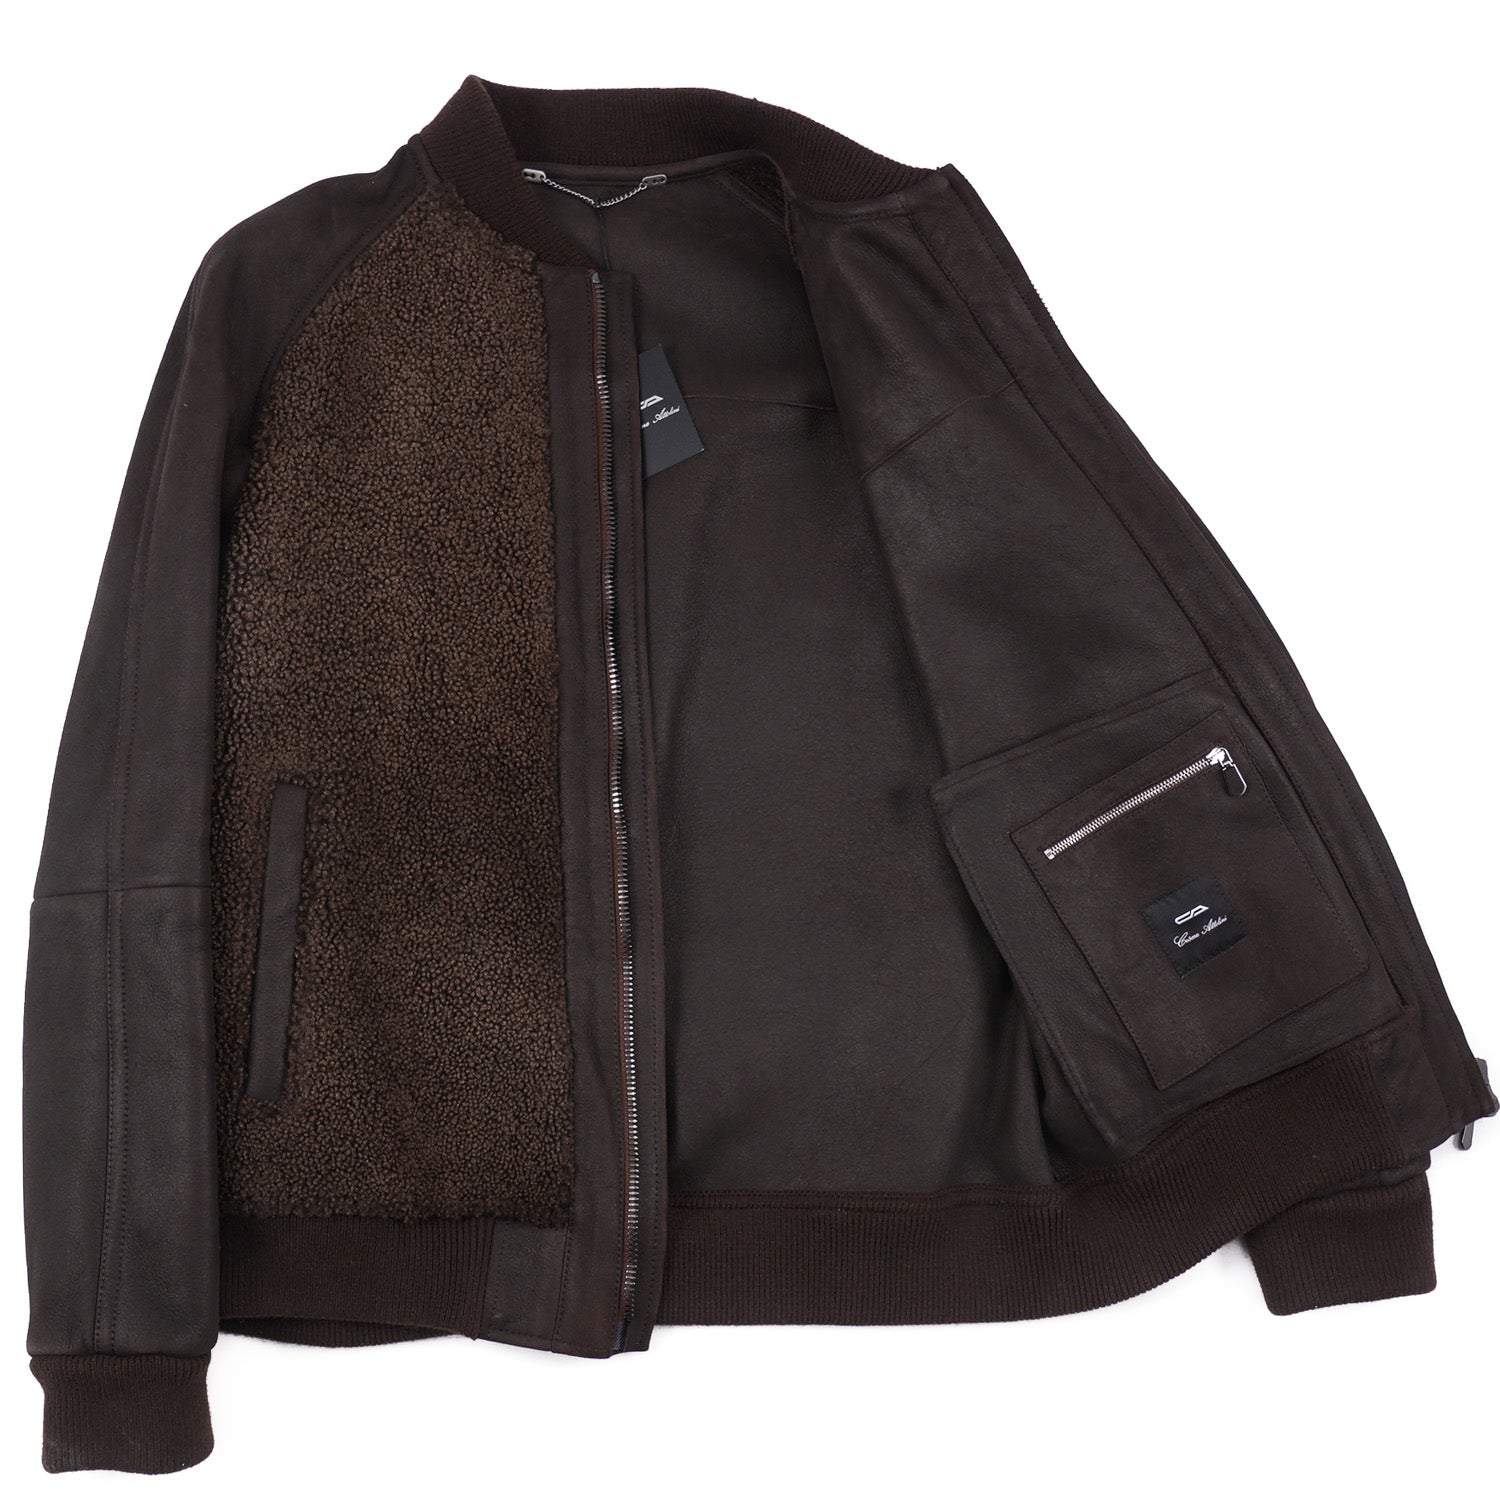 Cesare Attolini Shearling Leather Bomber Jacket - Top Shelf Apparel